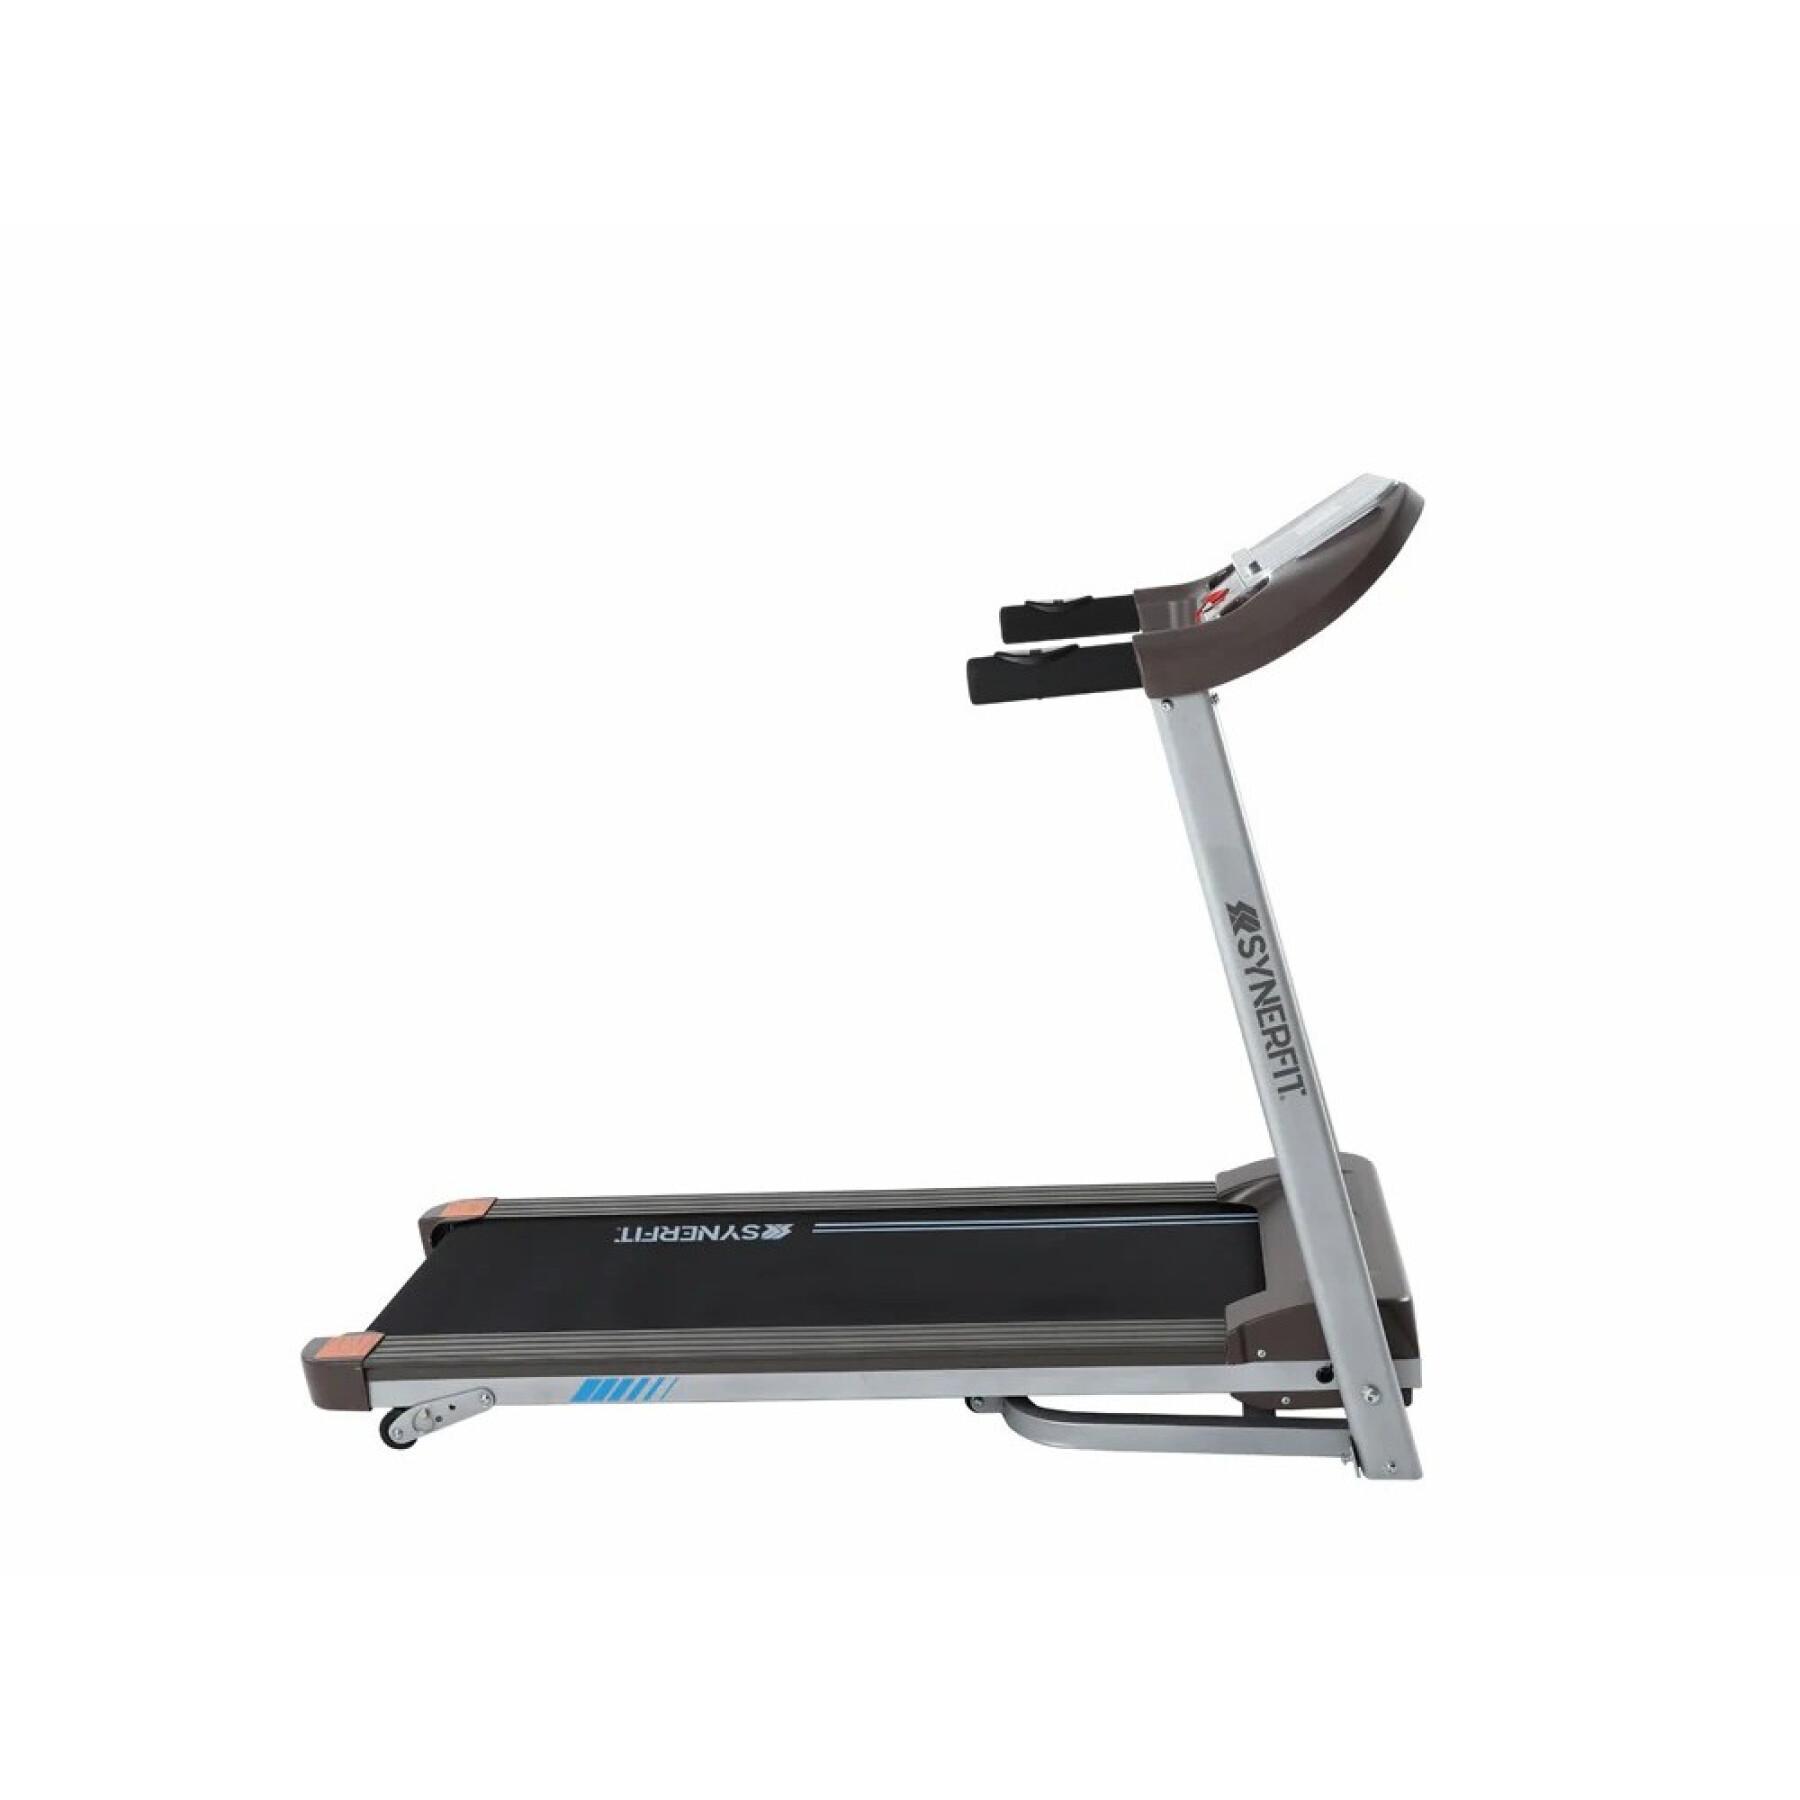 Treadmill Synerfit Fitness Gazelle - 2.0CV - 14km/h